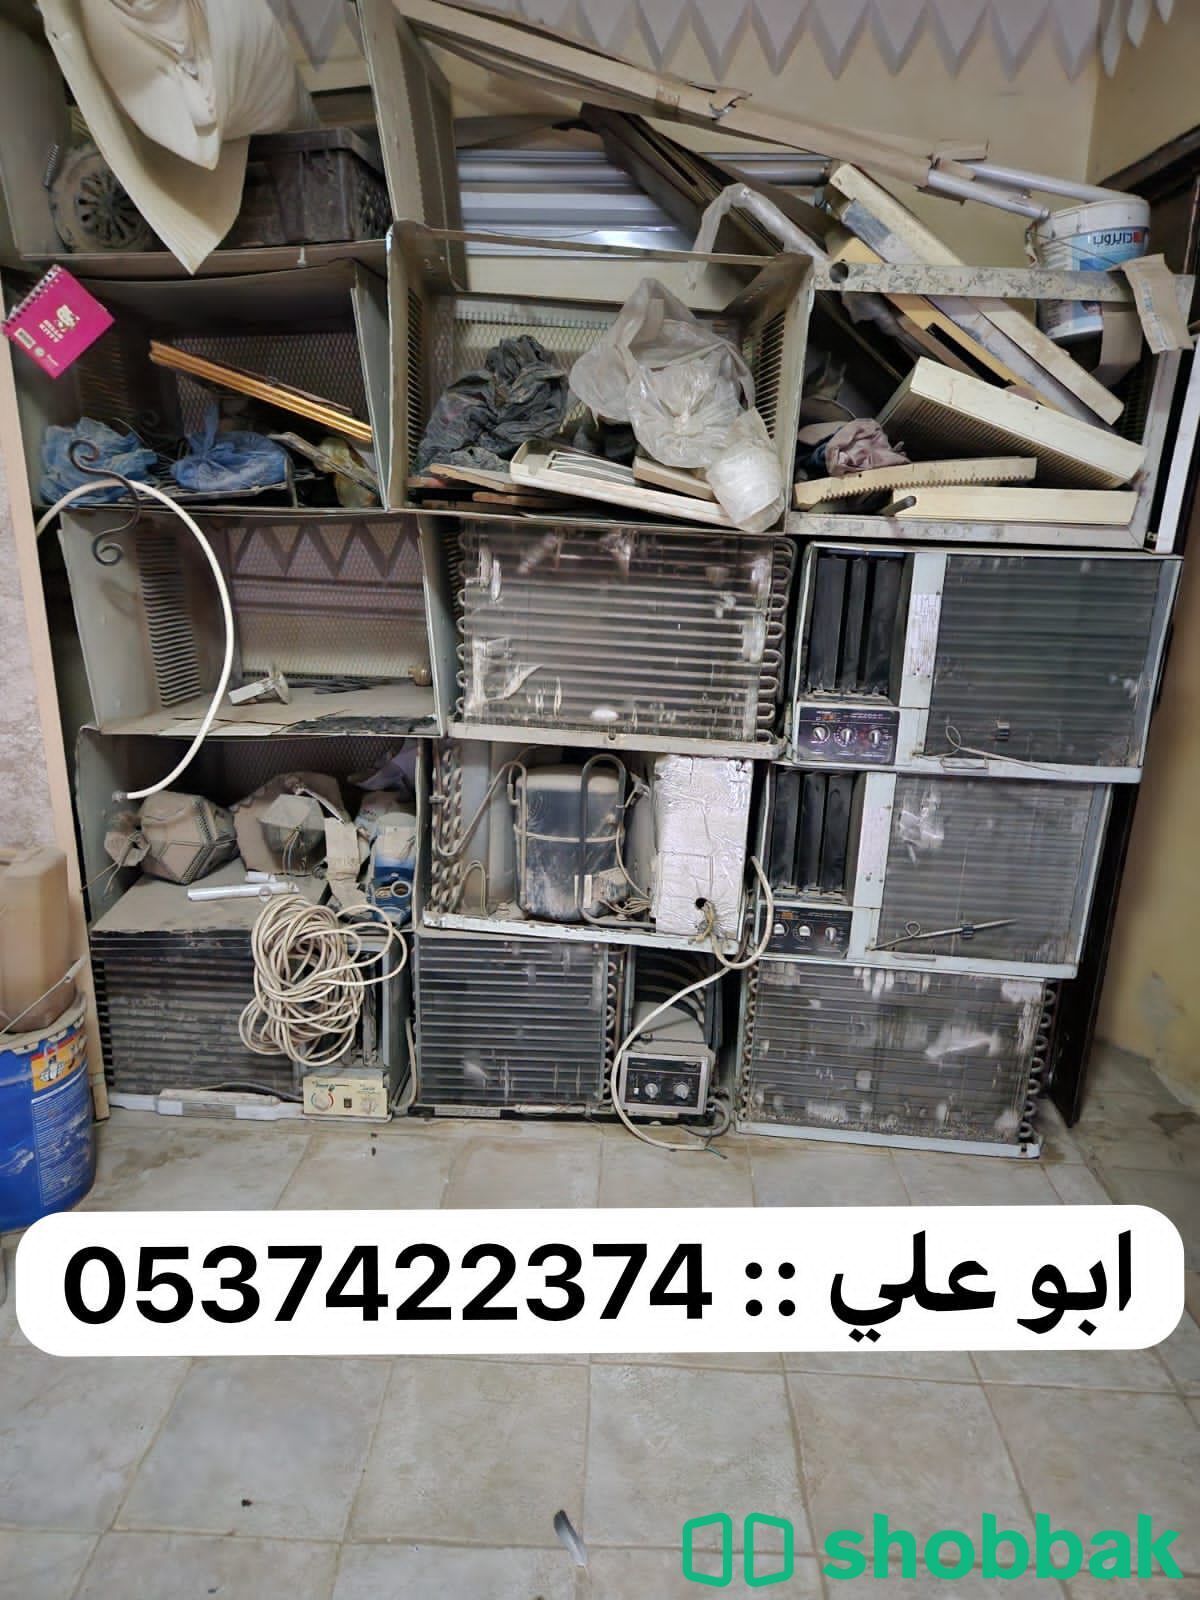 شراء مكيفات مستعمله بالرياض 0537422374 Shobbak Saudi Arabia